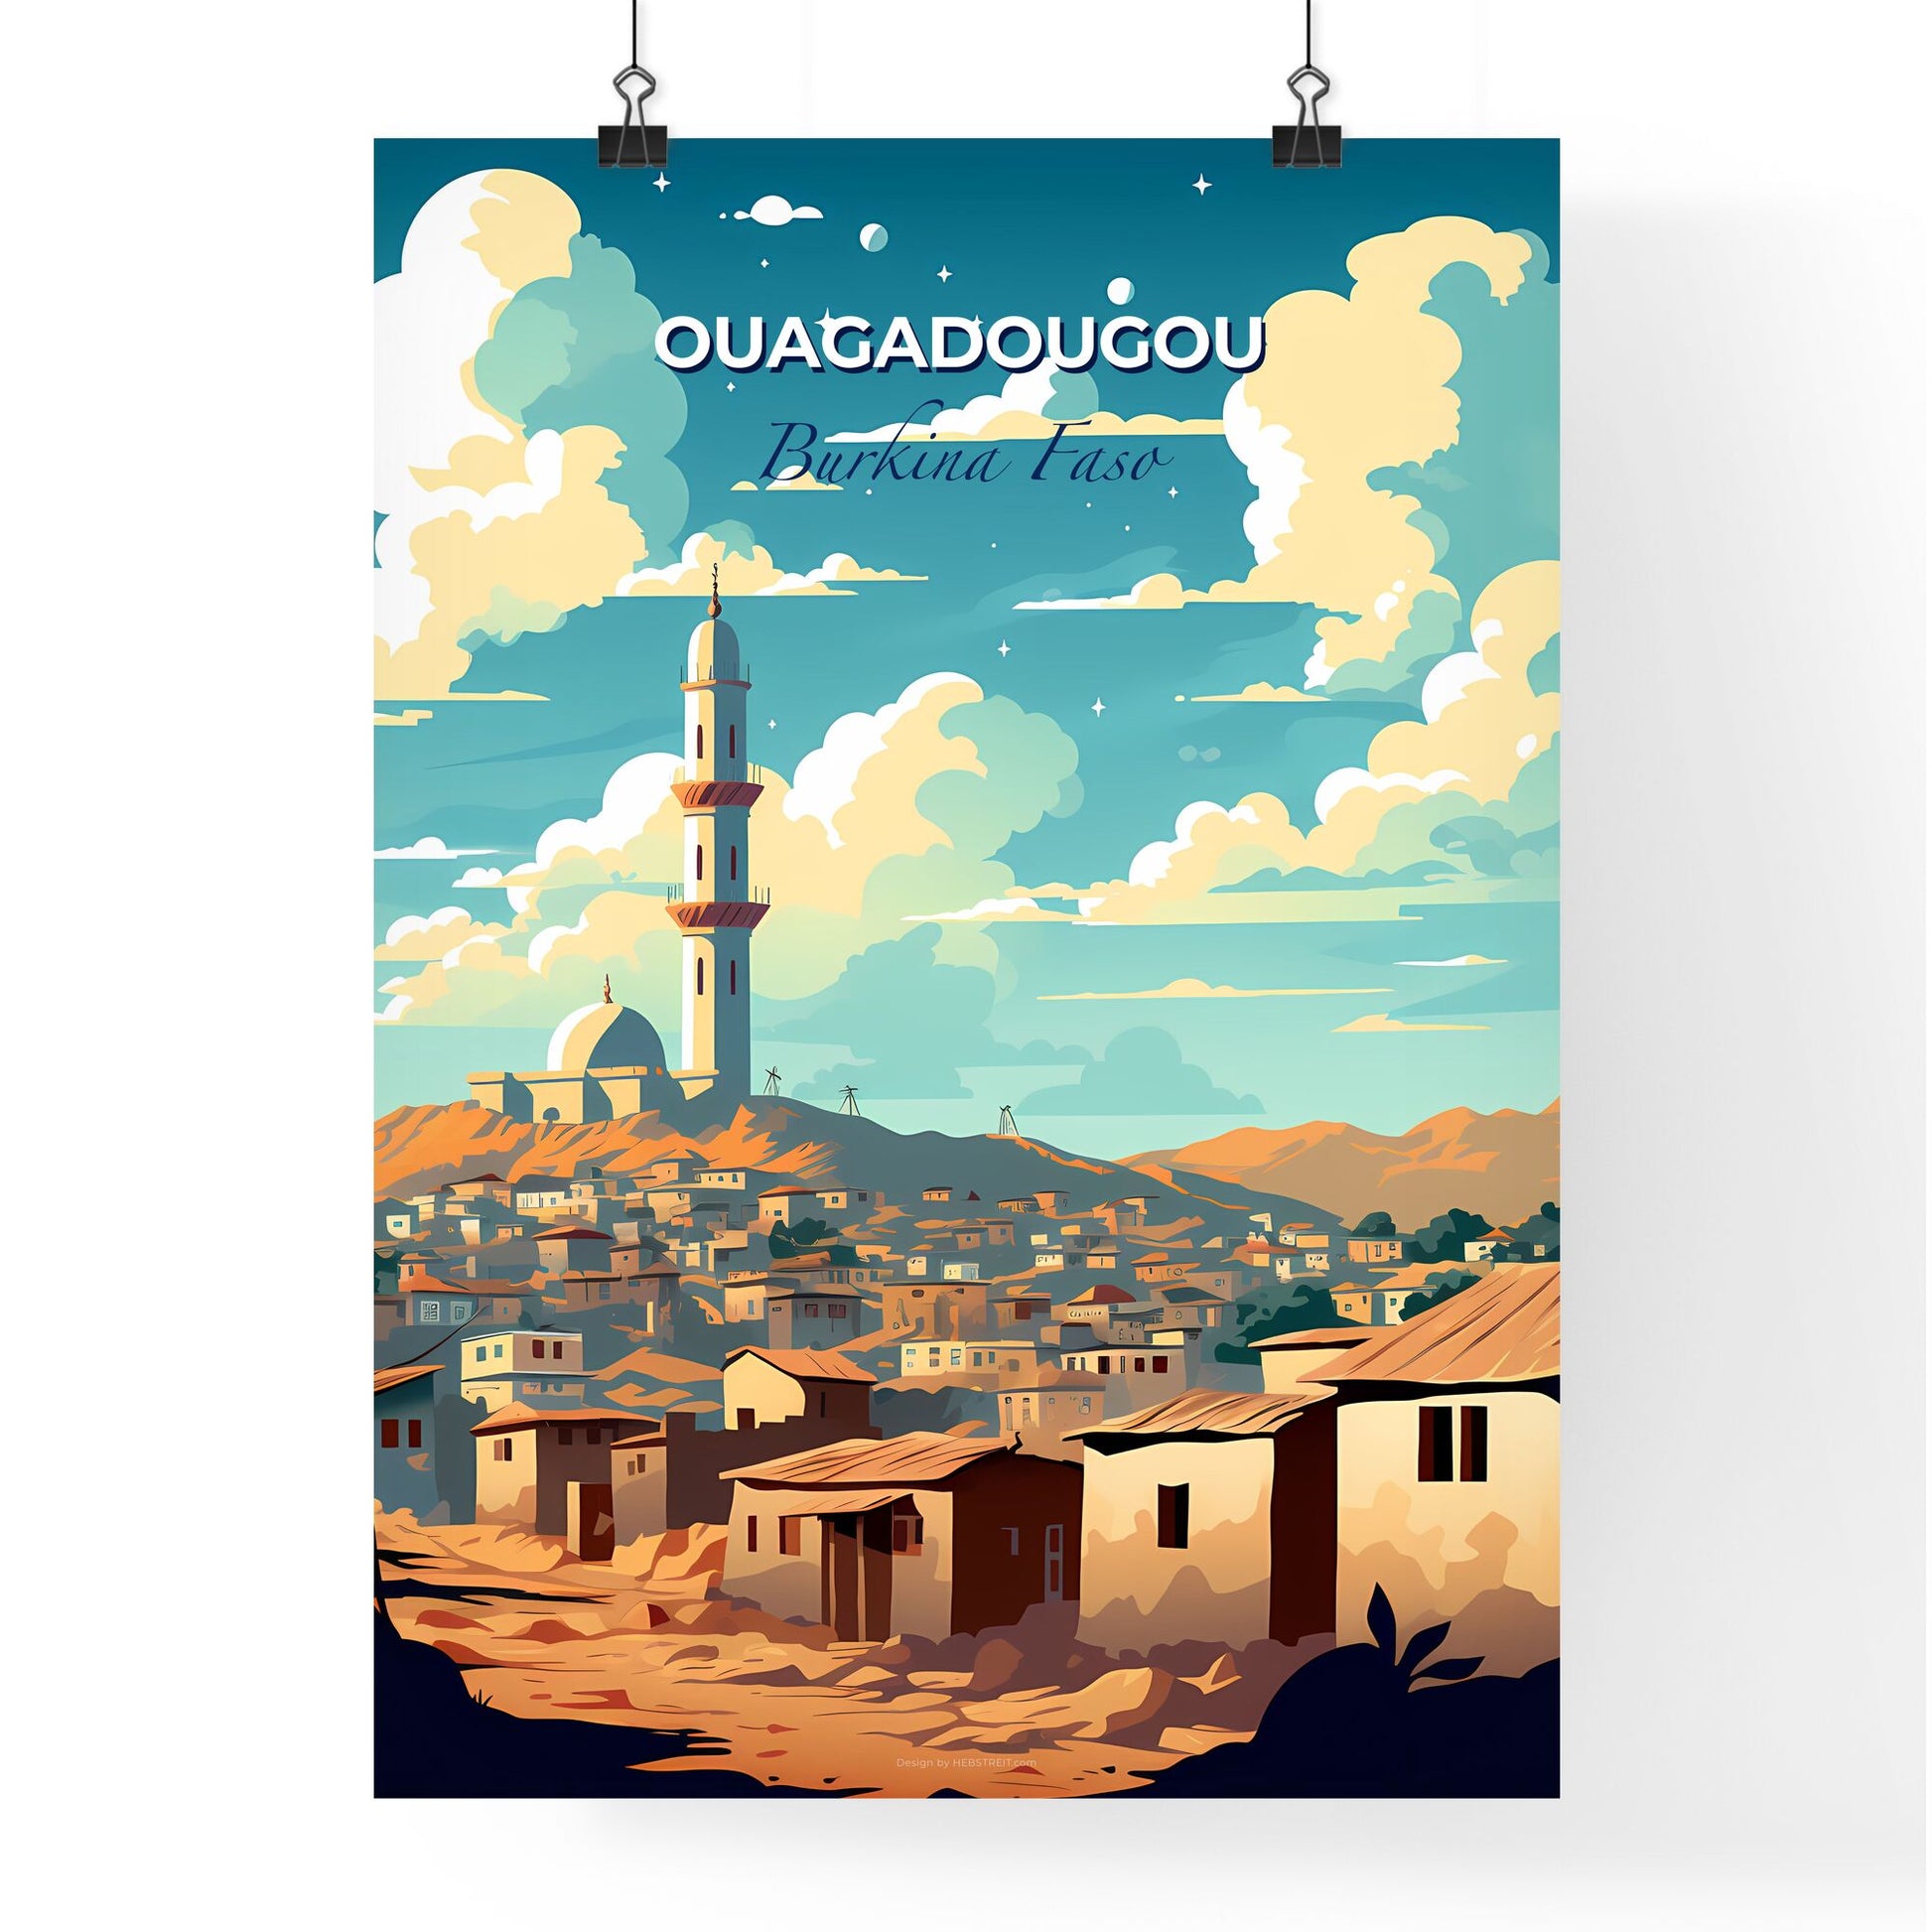 Vibrant Cityscape Painting of Ouagadougou Burkina Faso Skyline with Tower Default Title